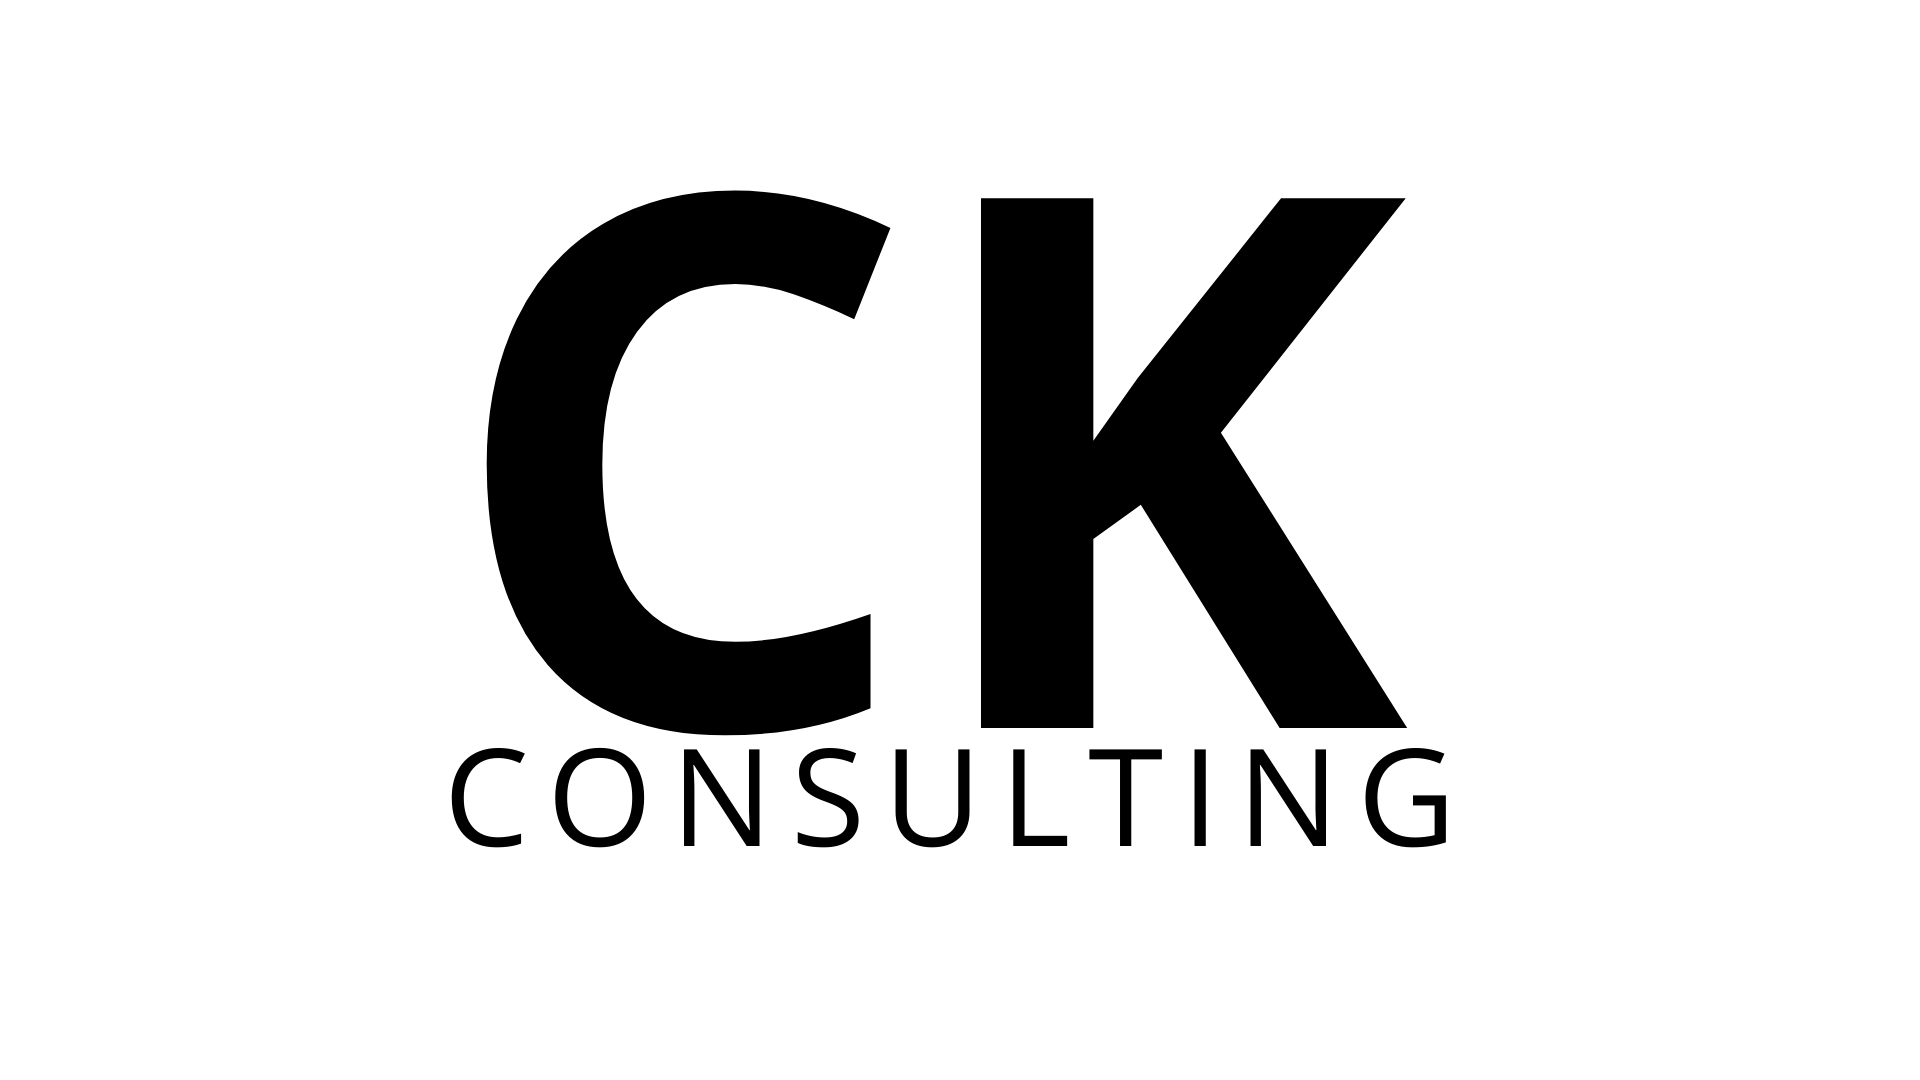 CK konsulting